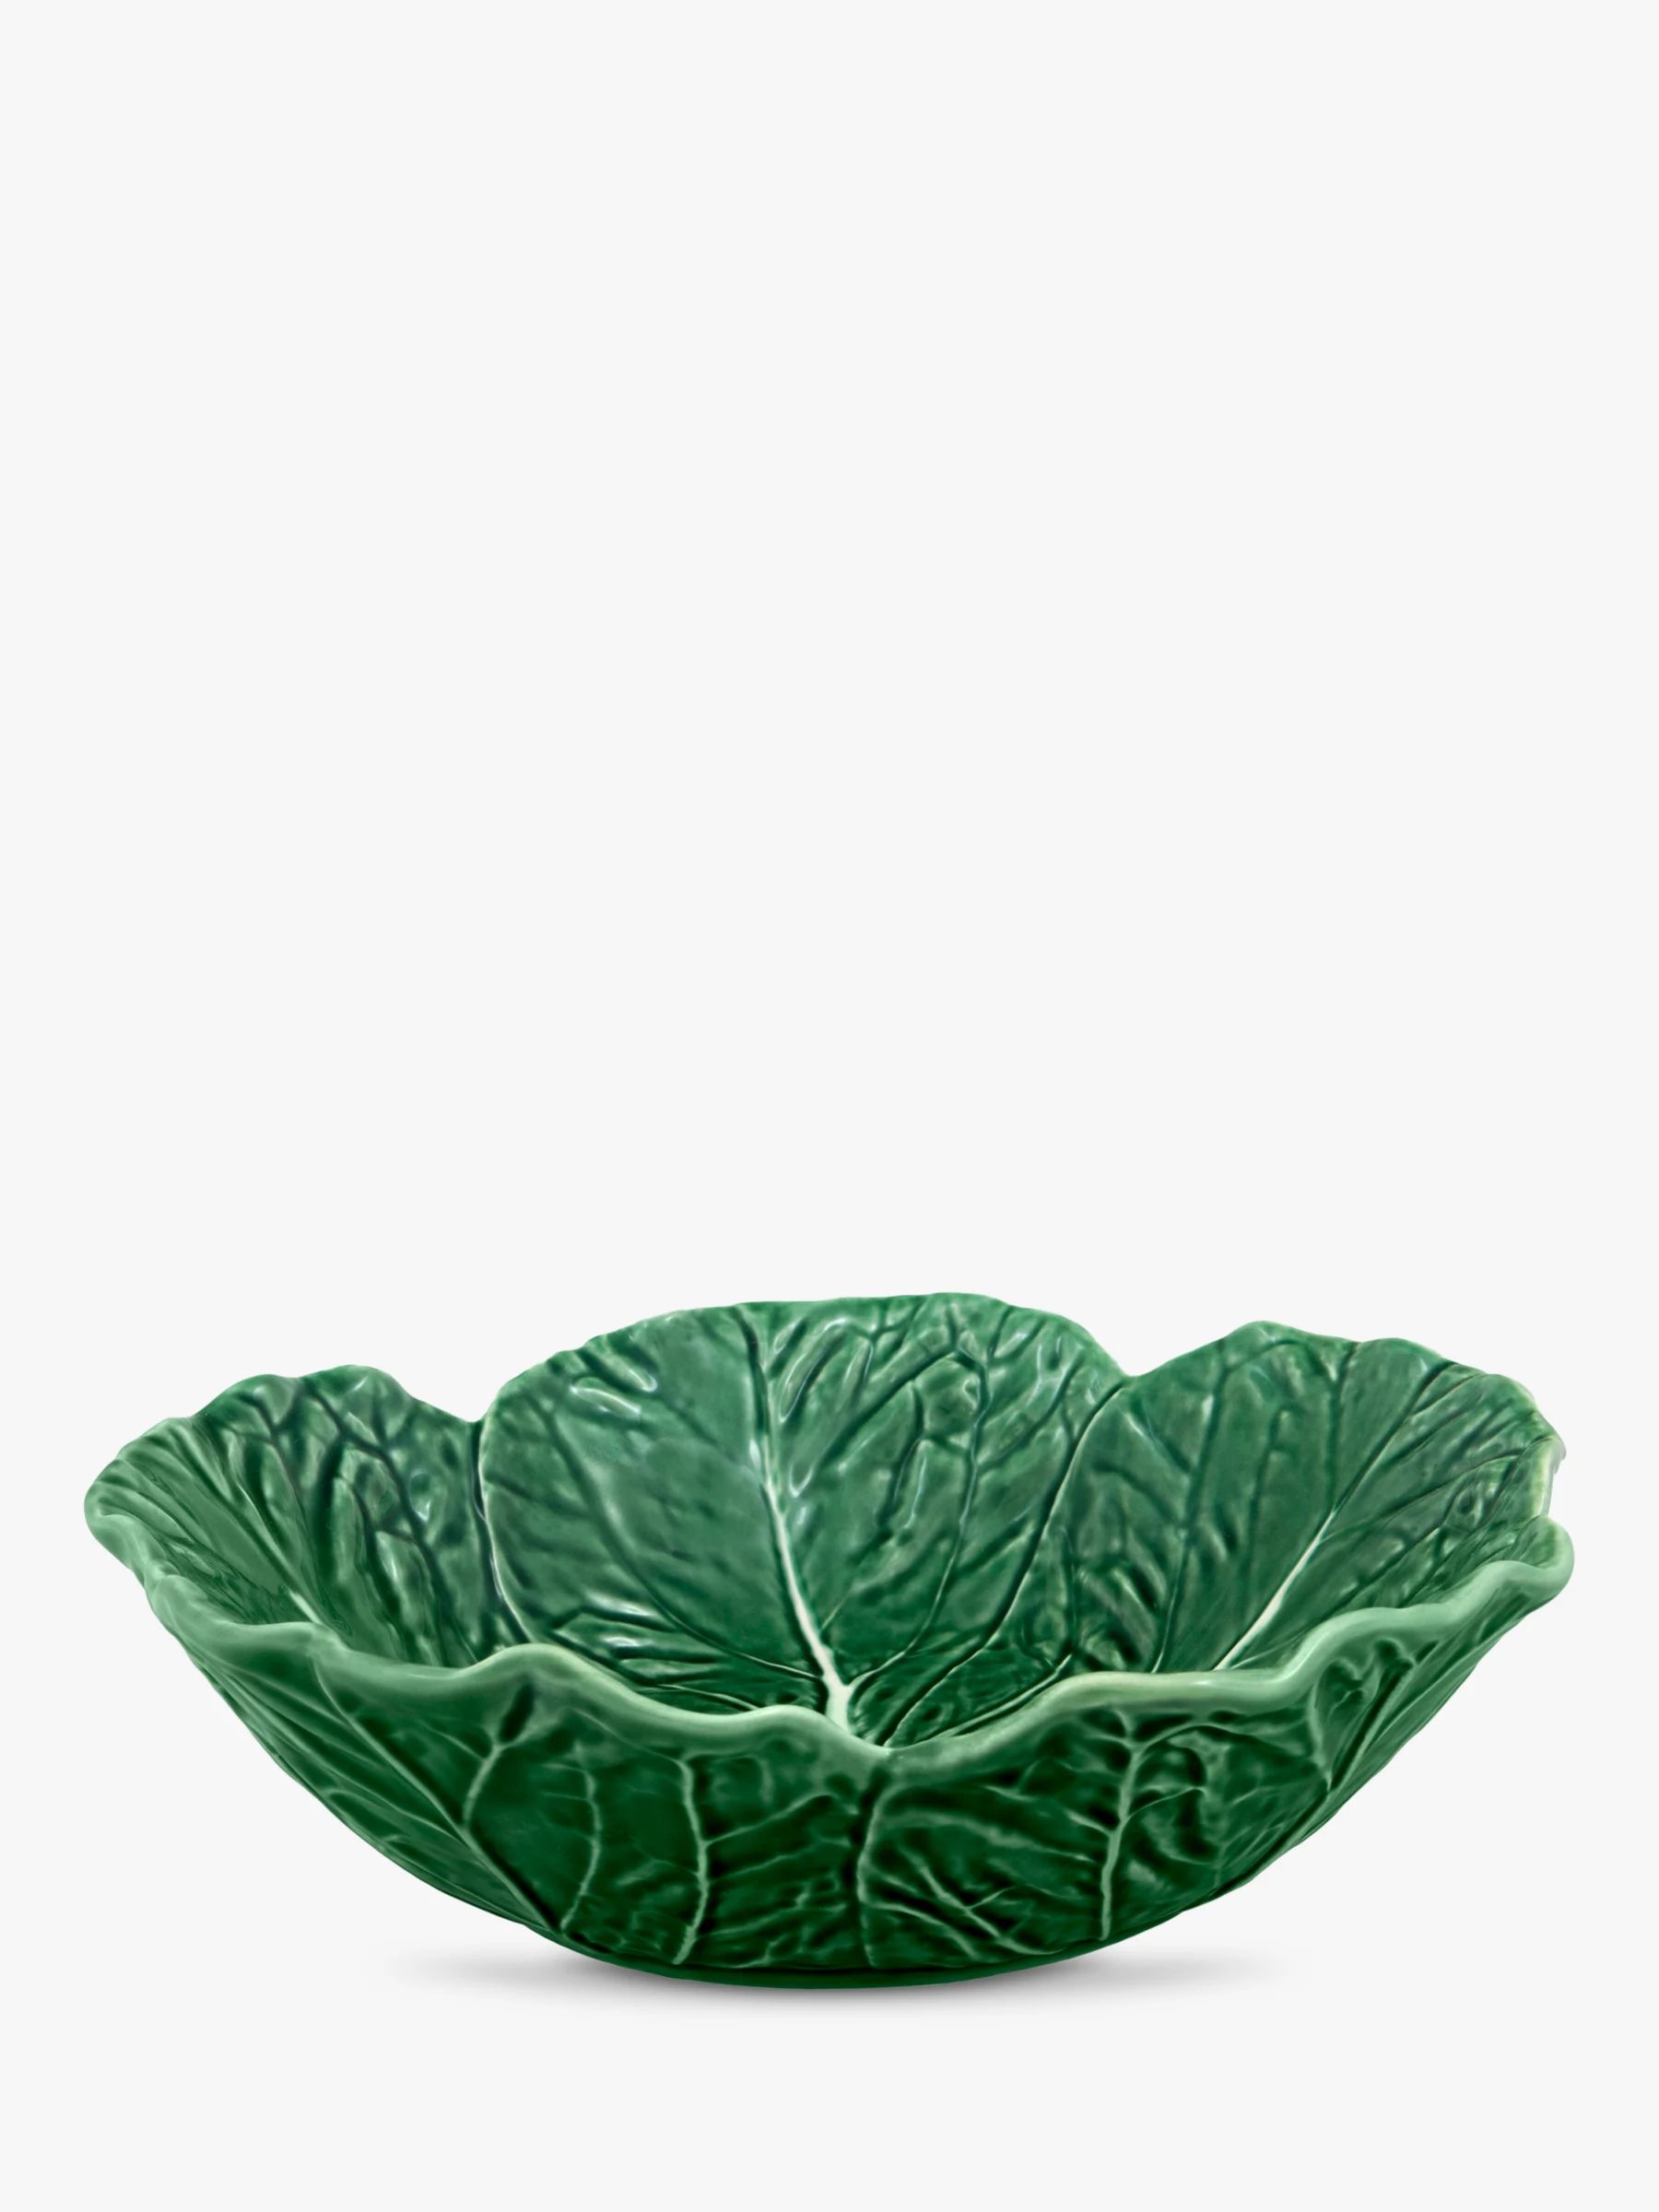 Bordallo Pinheiro Cabbage Earthenware Serving Bowl, 29cm, Green | John Lewis (UK)